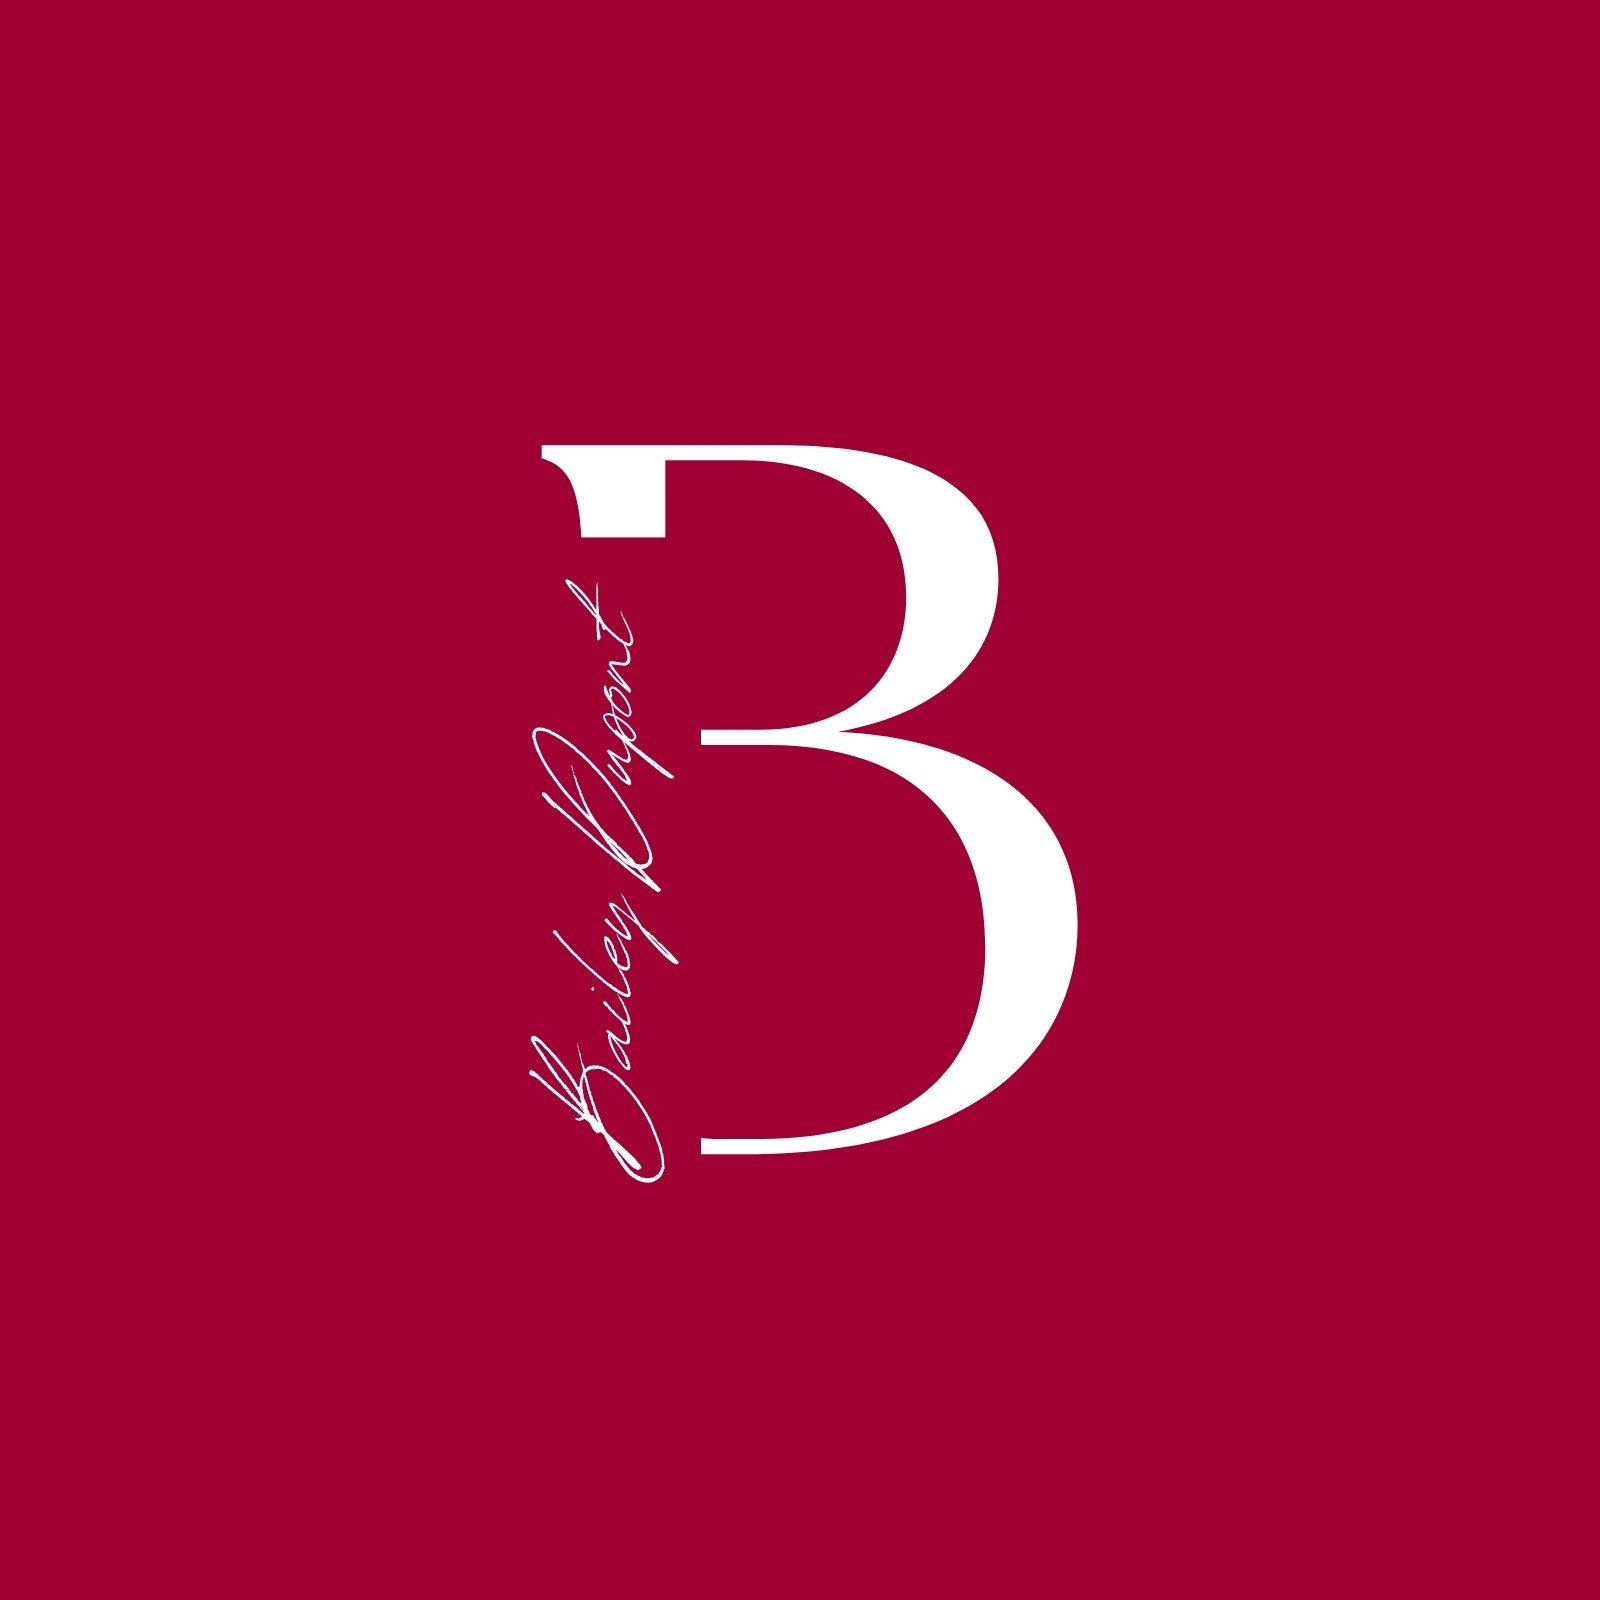 b logo images